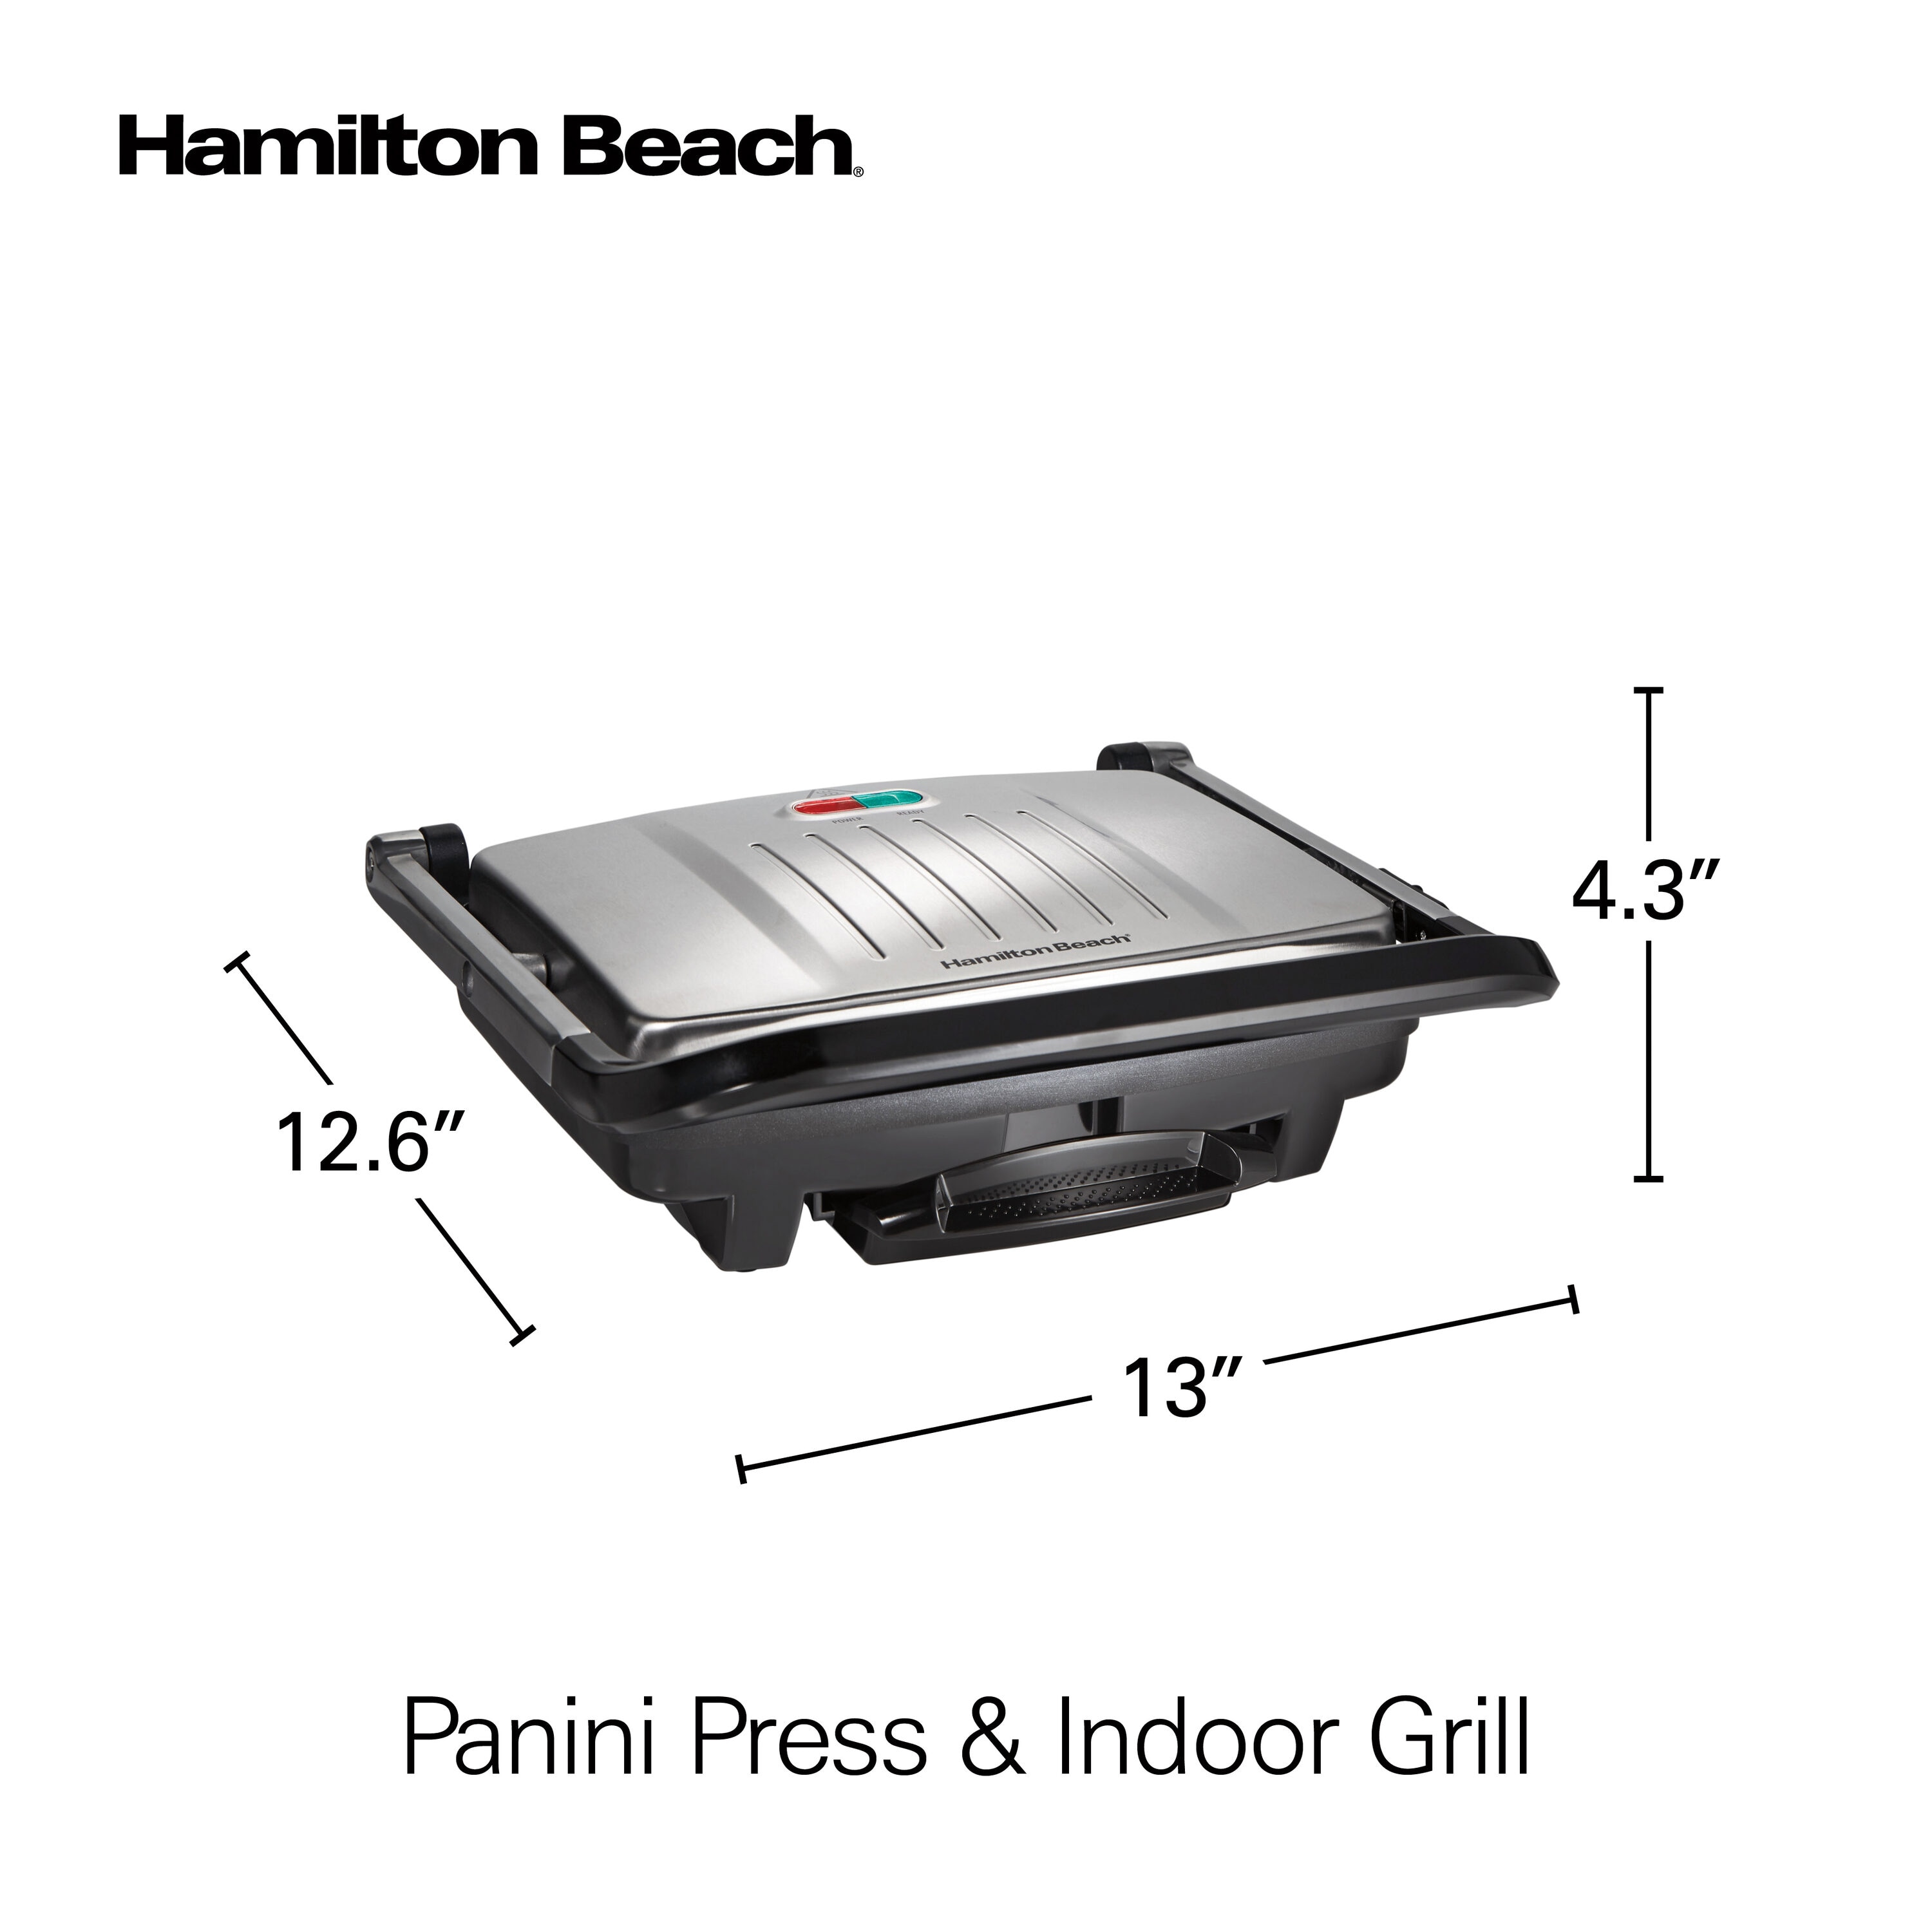 Hamilton Beach Panini Press & Indoor Grill - 25410